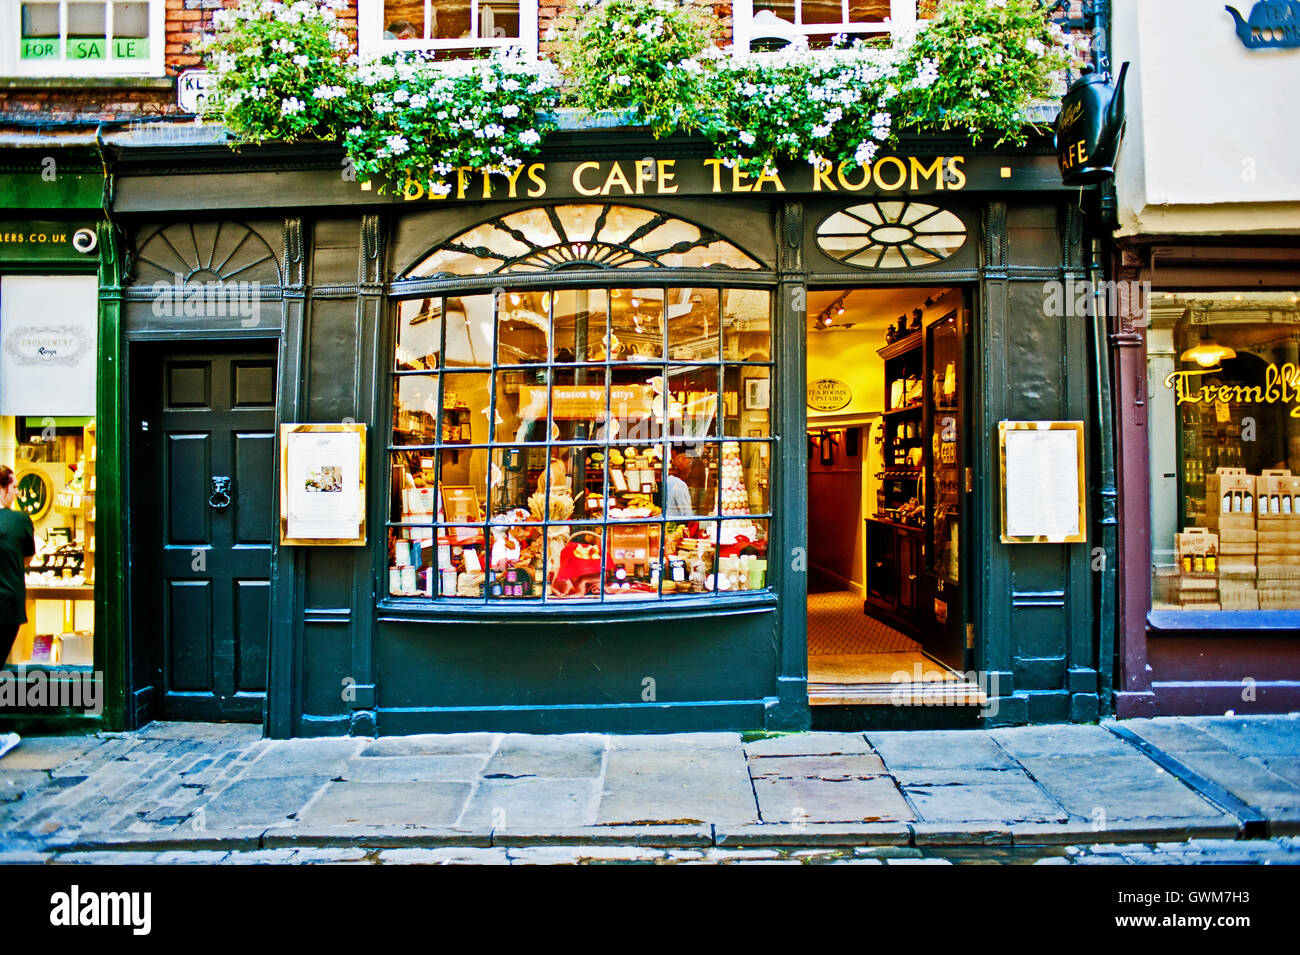 Bettys Cafe Tea Rooms, Stonegate, York Stock Photo - Alamy